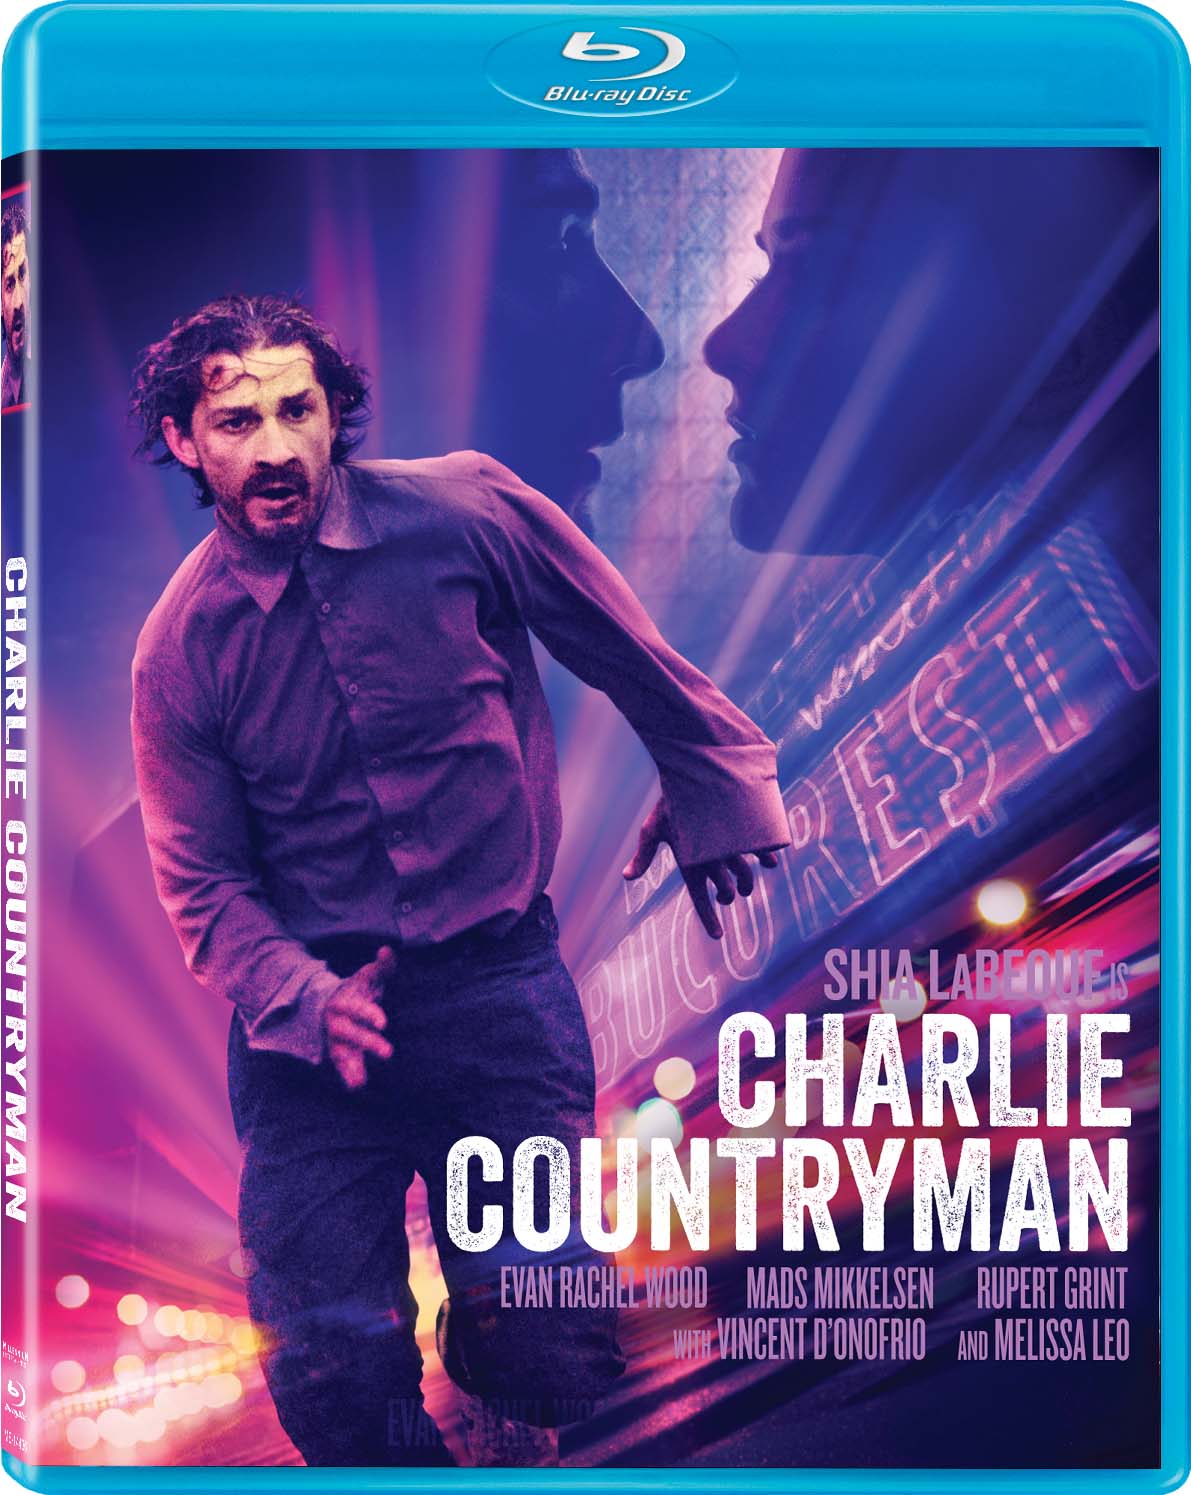 Charlie Countryman Blu-ray Review